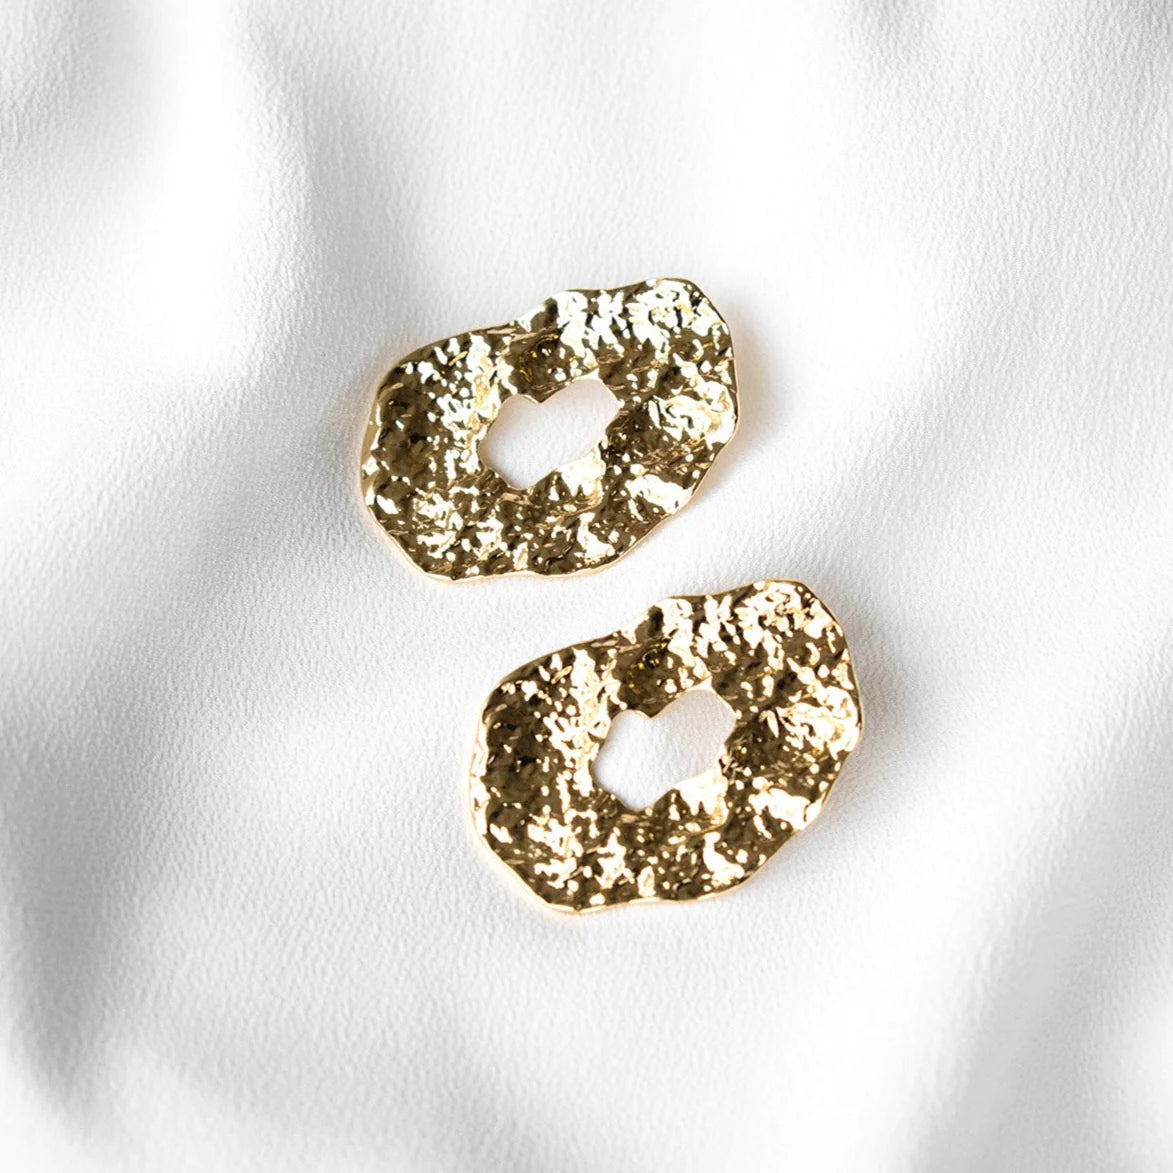 Odelle Gold Hoop Earrings - Rental